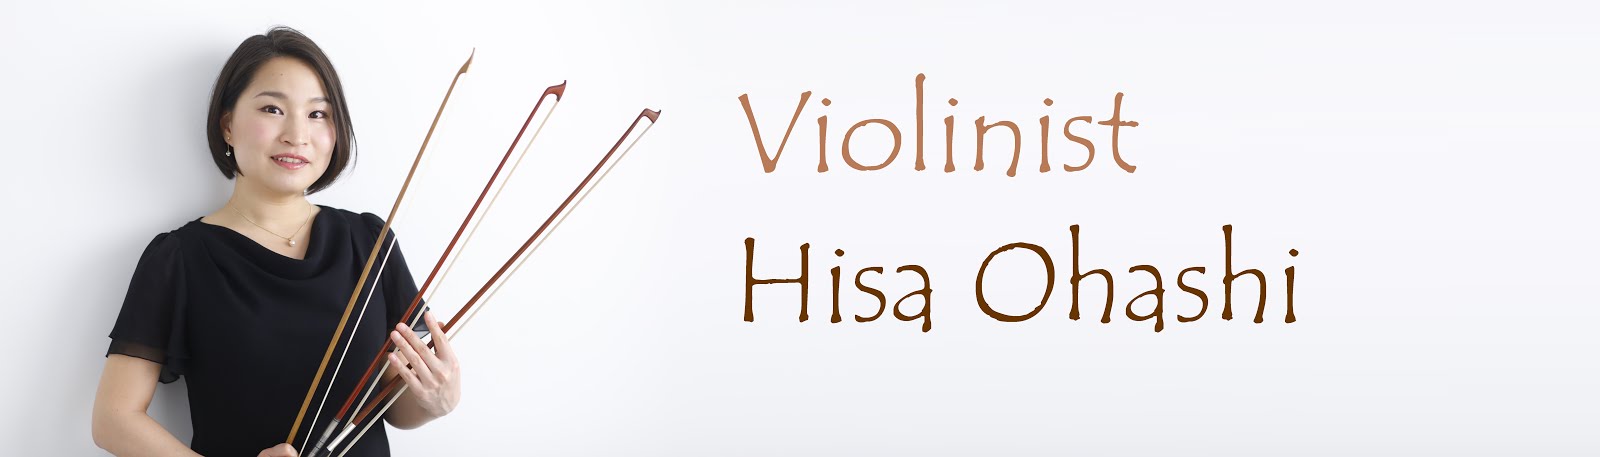 Violinist Hisa Ohashi